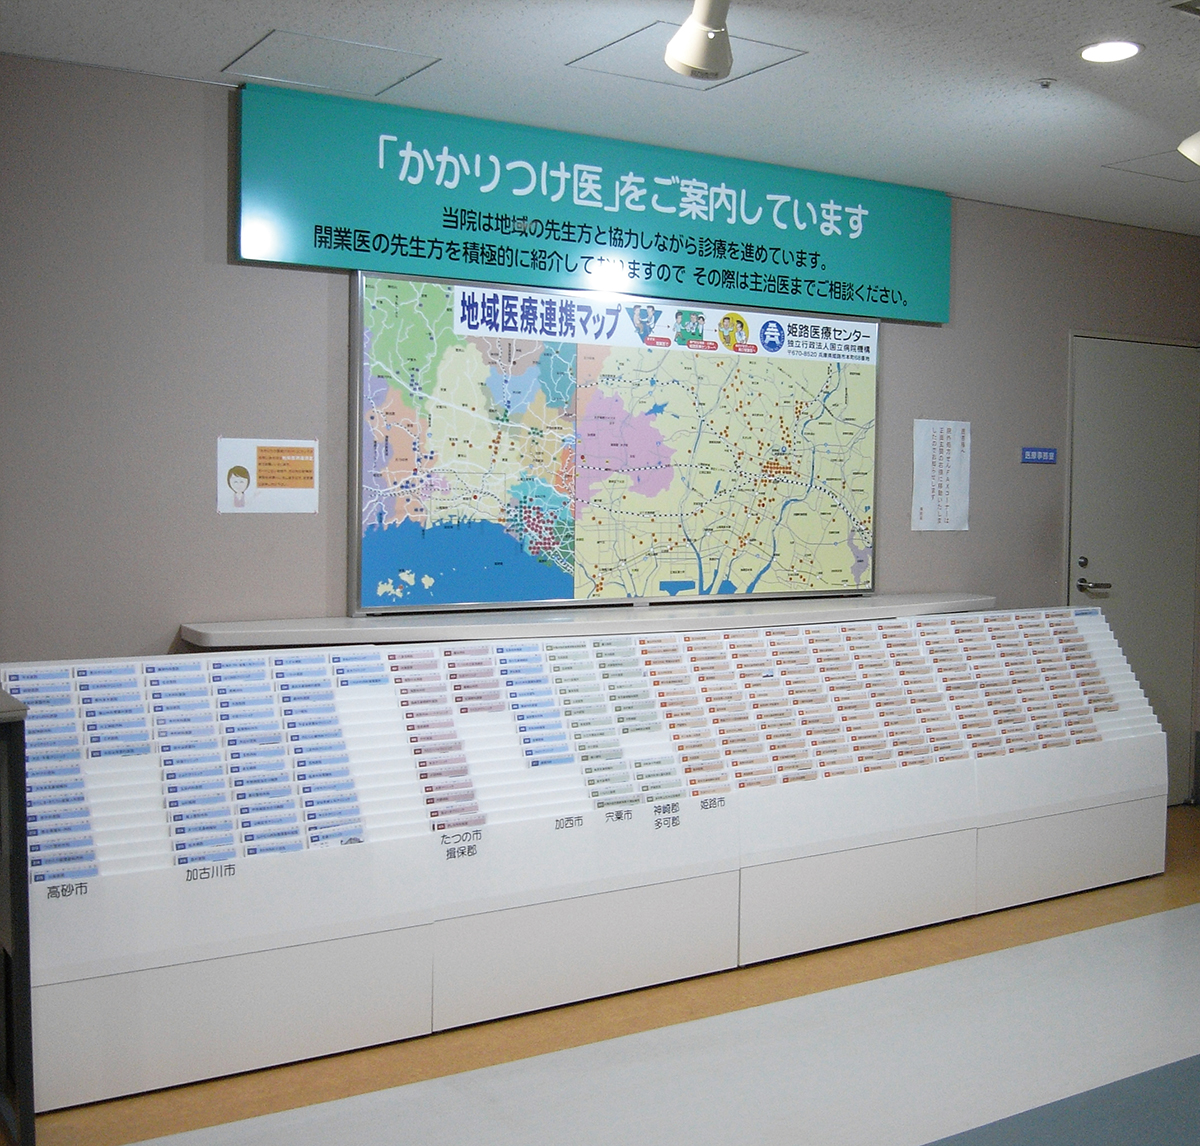 独立行政法人国立病院機構 姫路医療センター